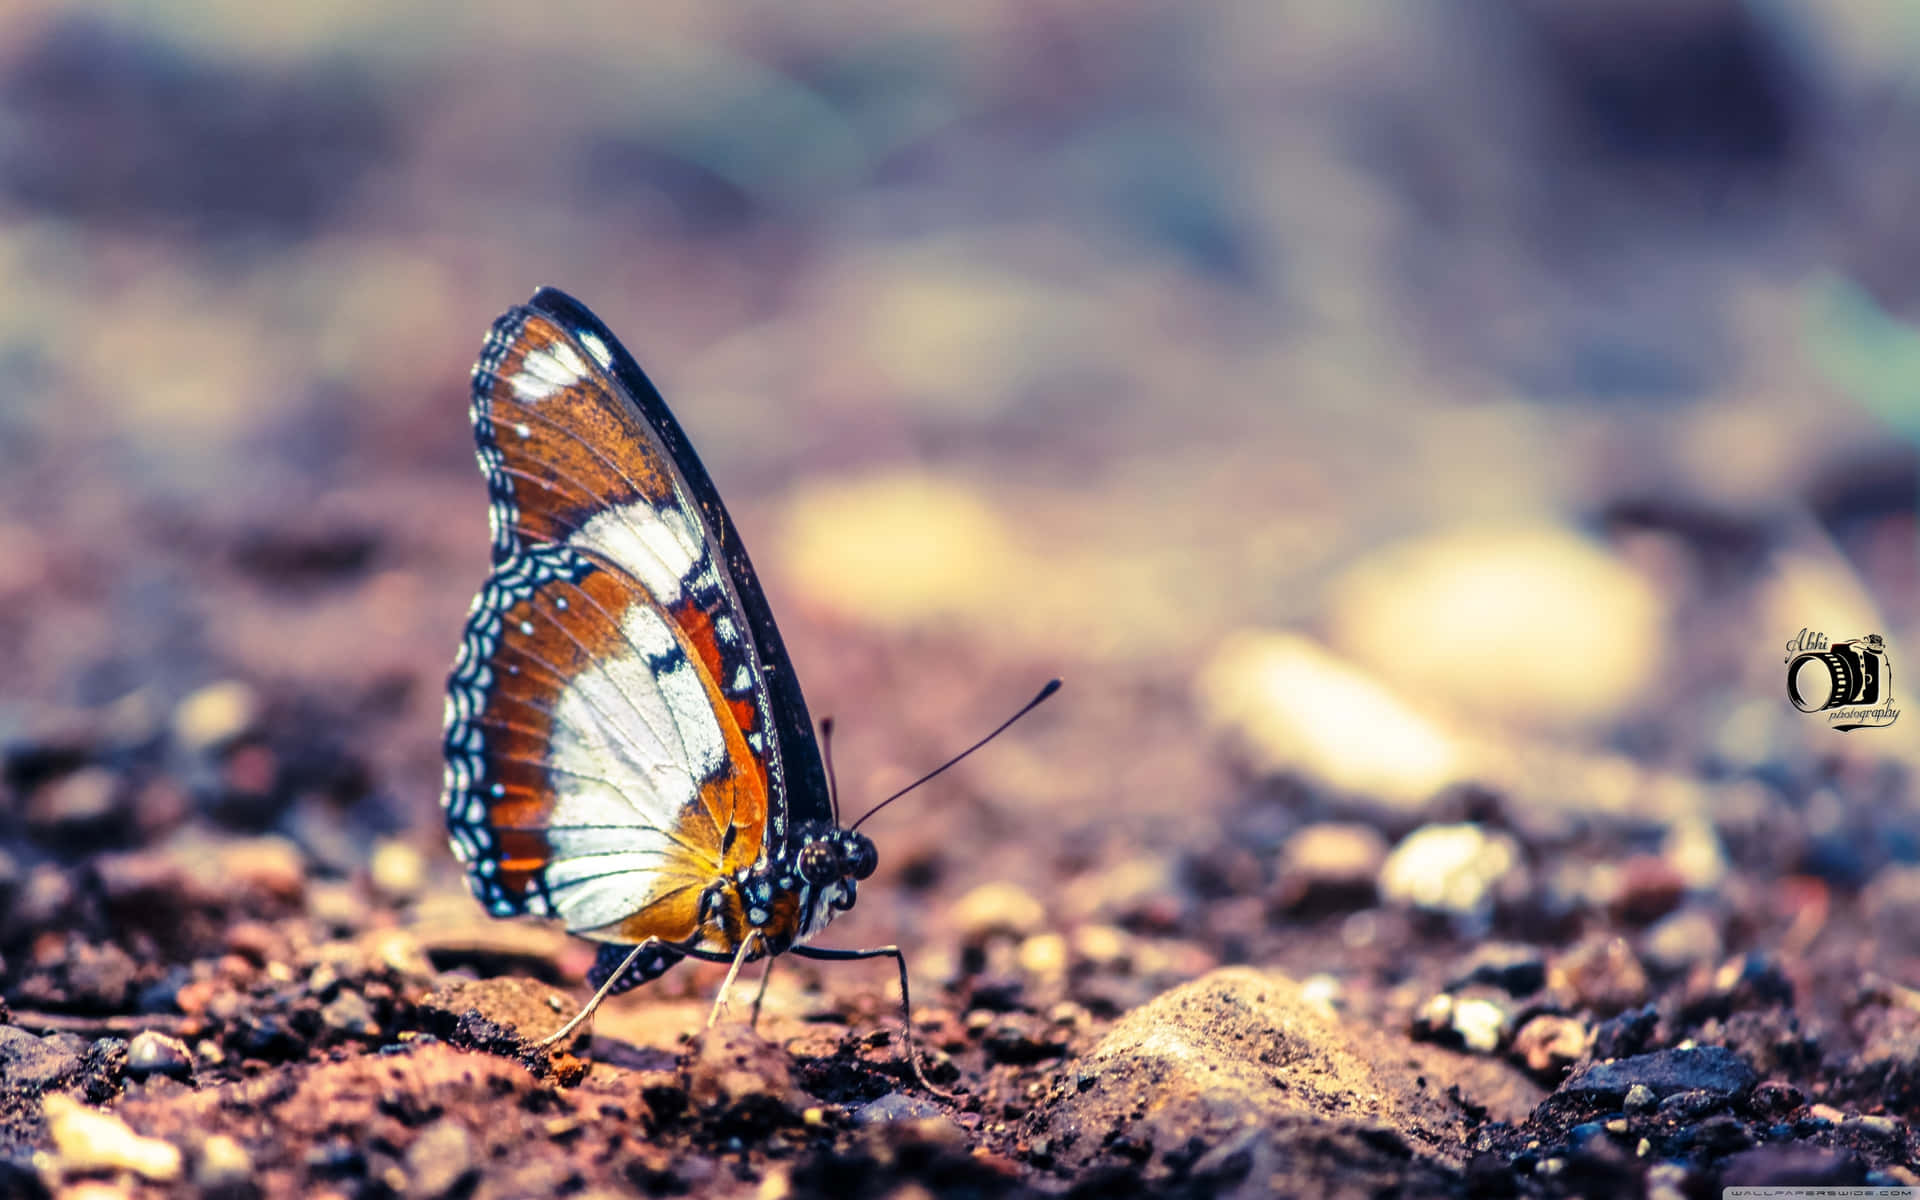 Beauty of Nature - A Monarch Butterfly Taking Flight